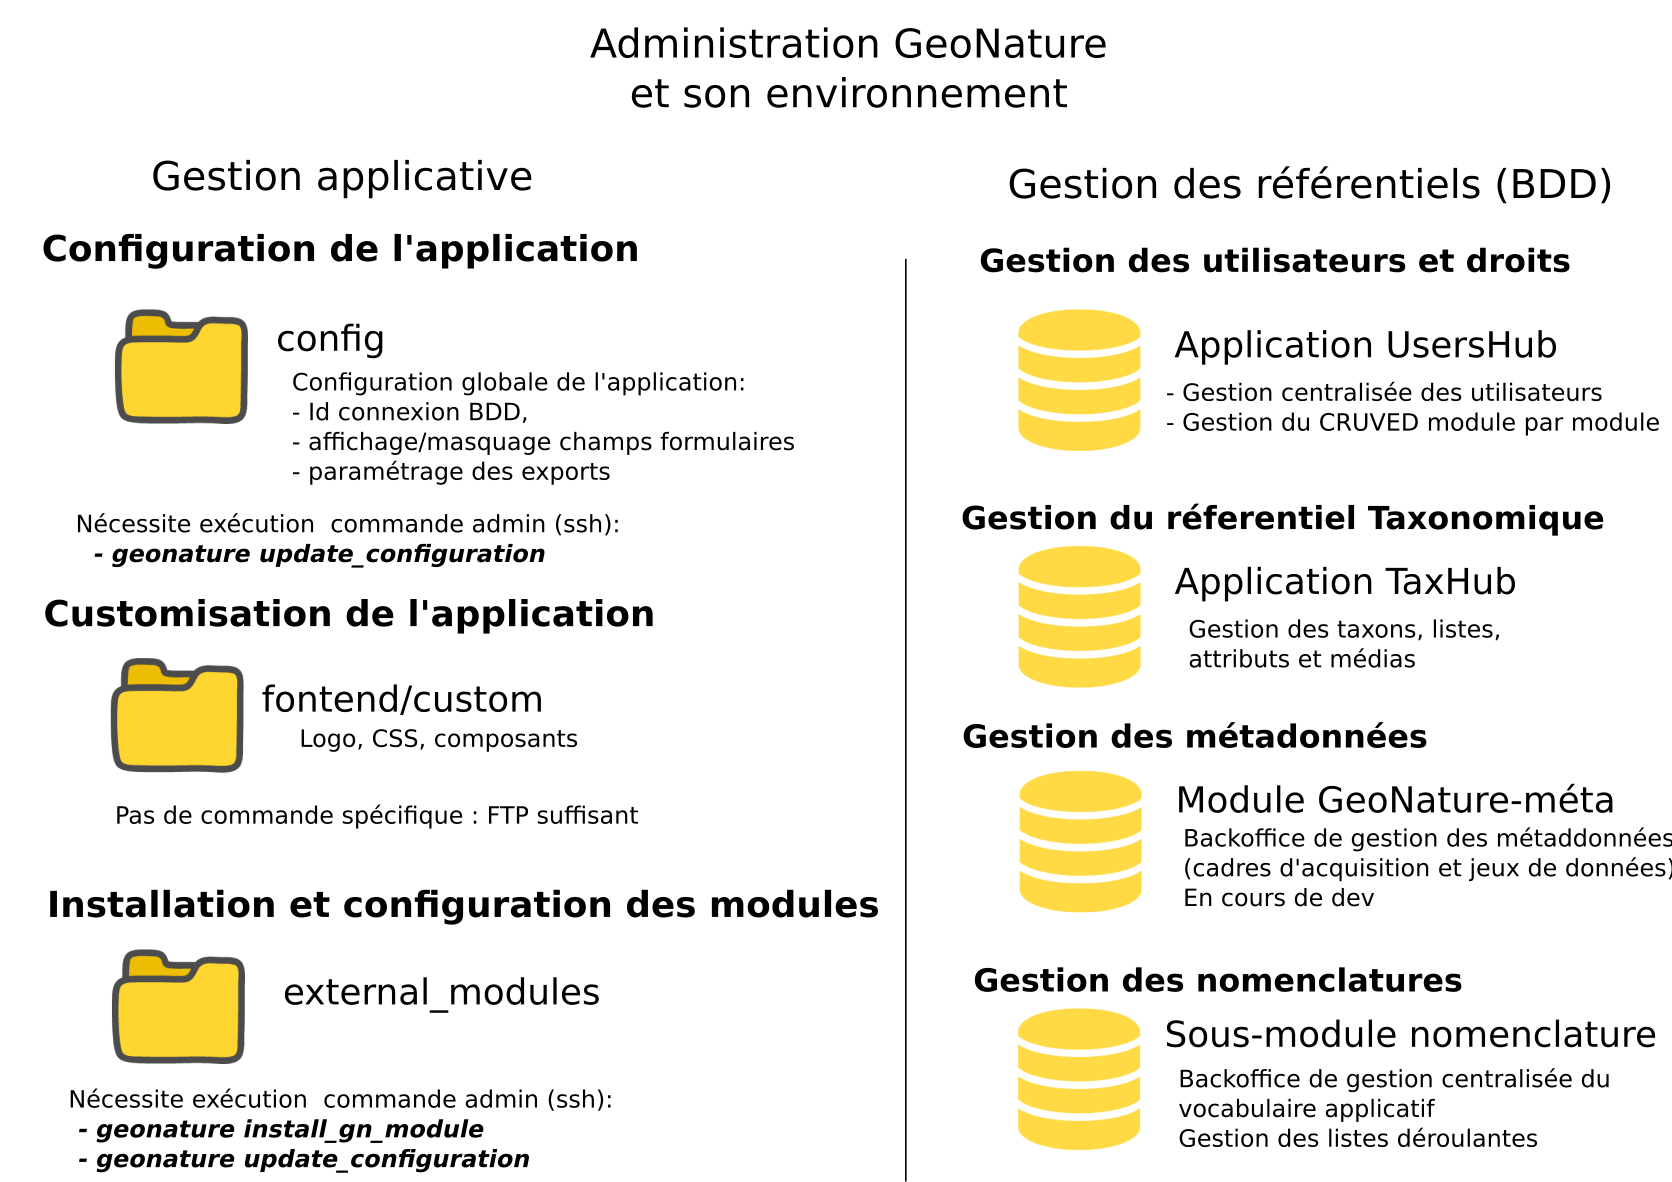 https://geonature.fr/docs/img/admin-manual/administration-geonature.png